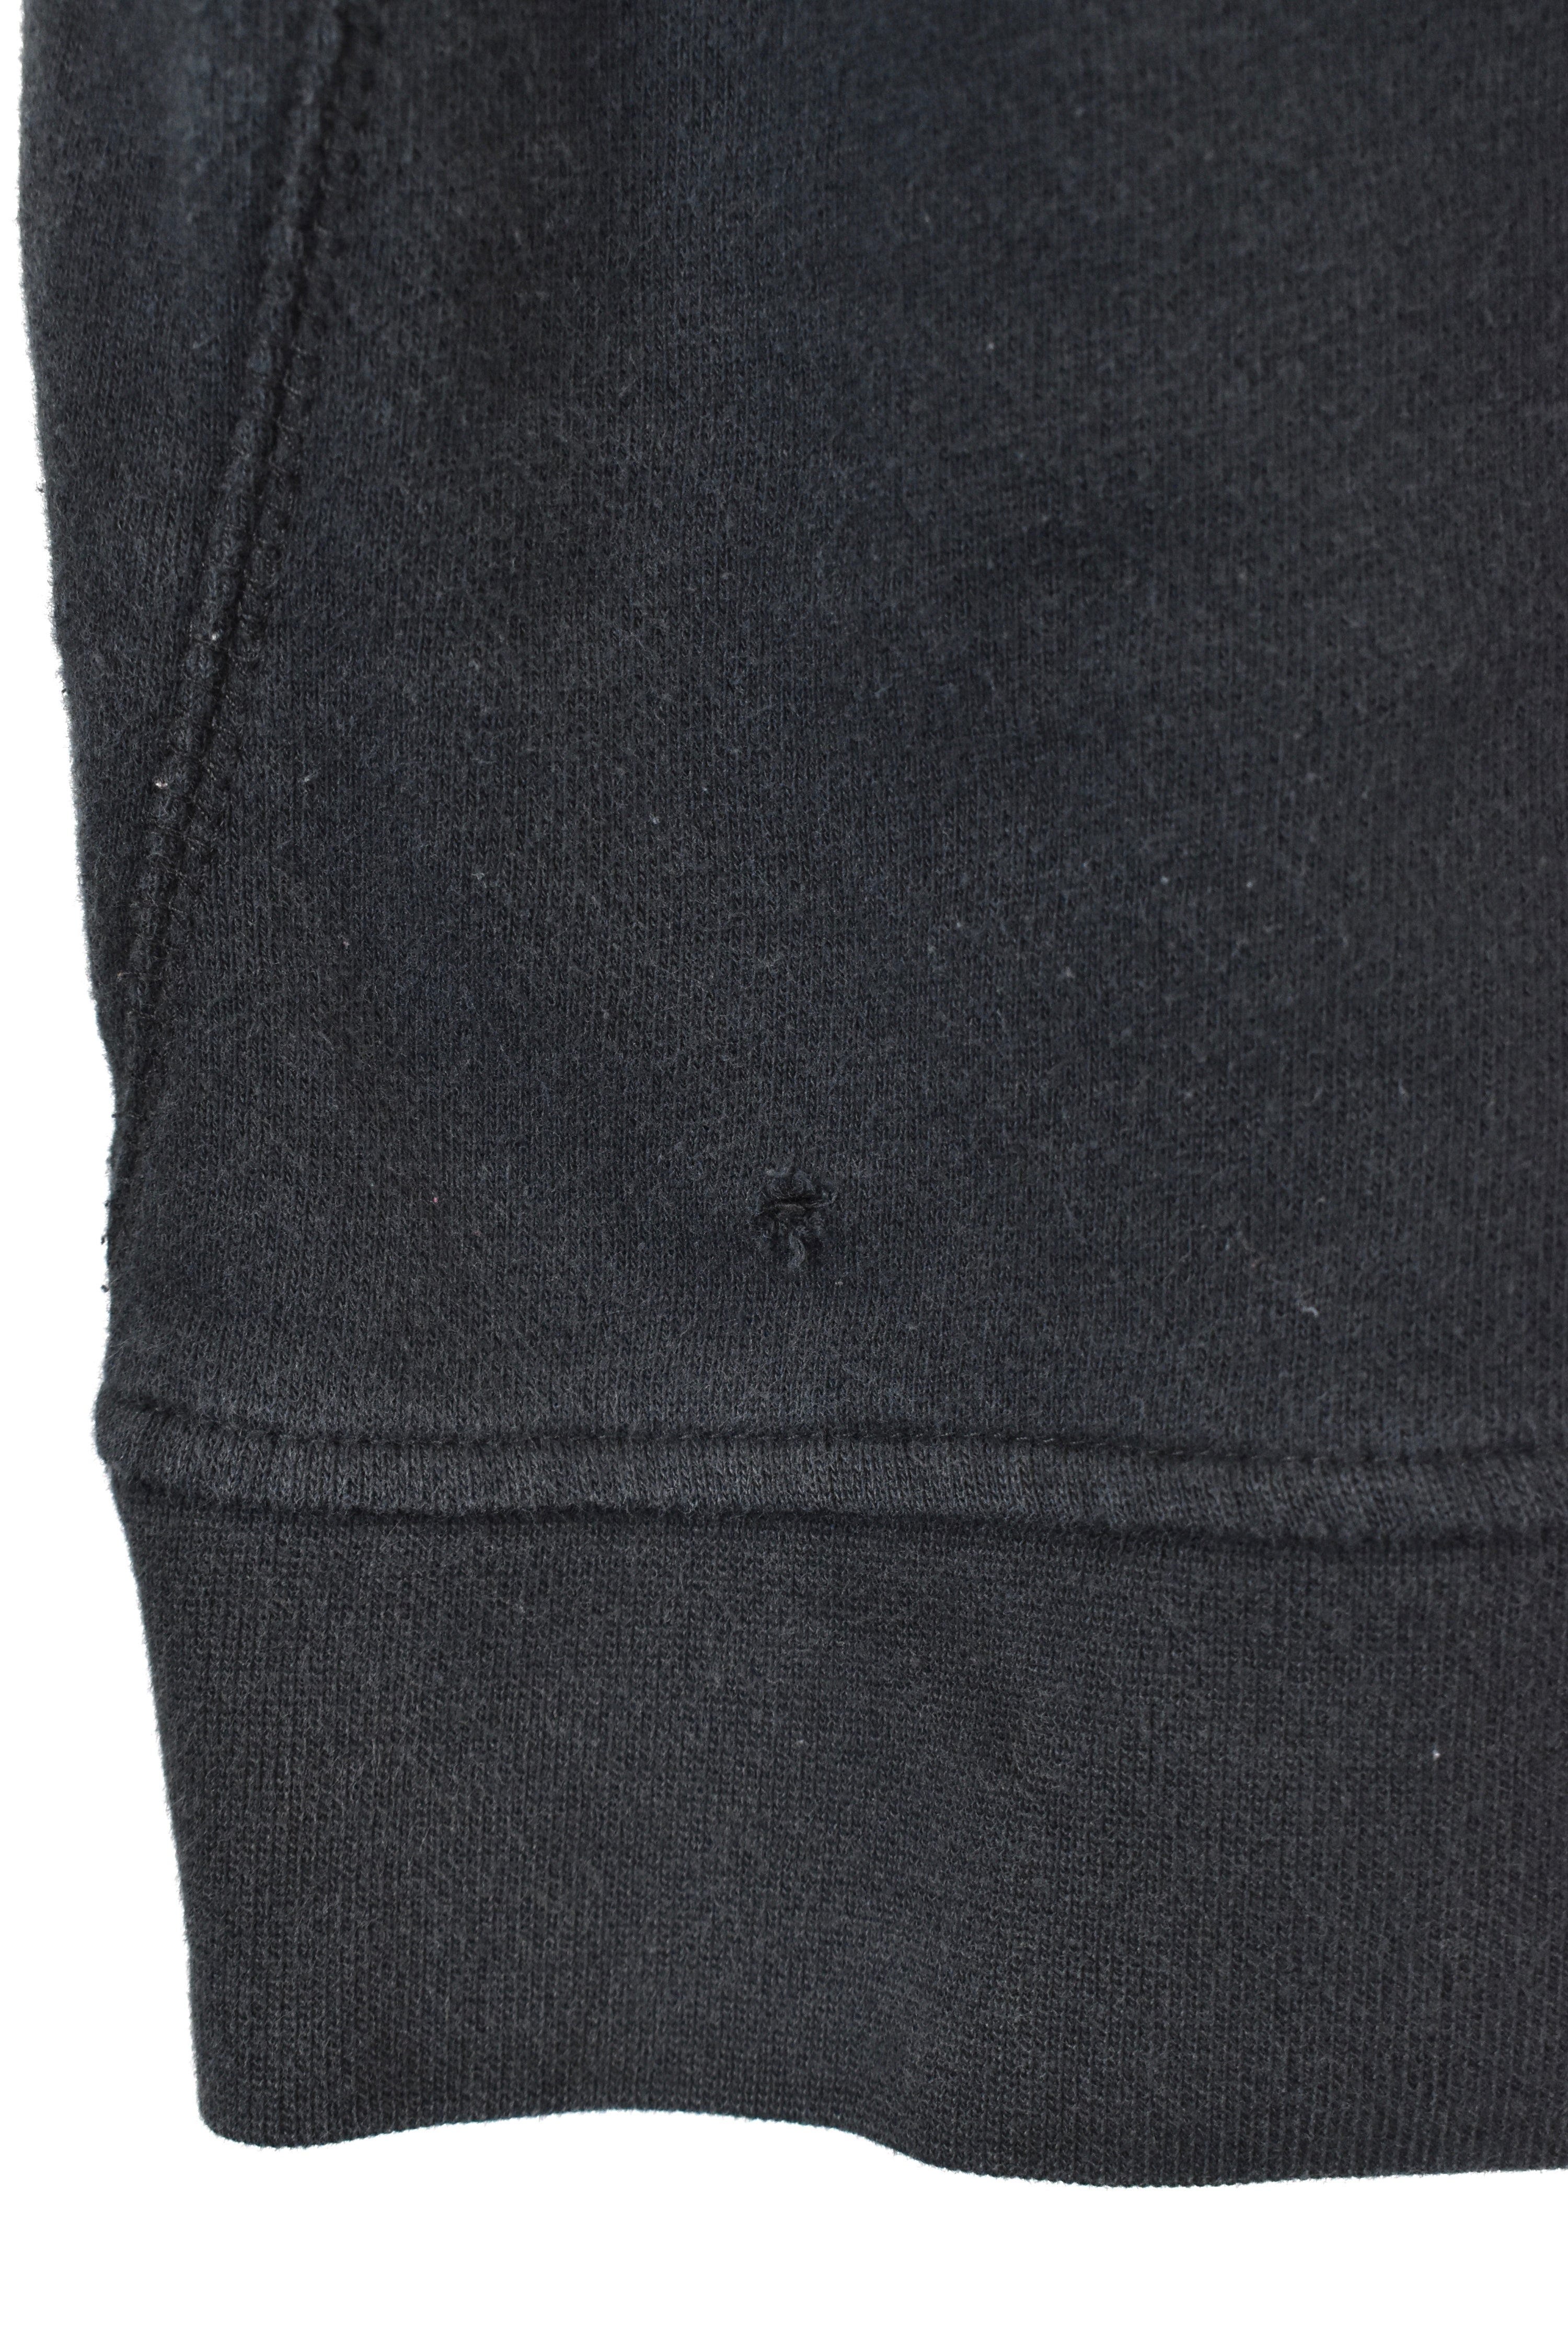 Vintage Reebok hoodie, black embroidered sweatshirt - AU XL REEBOK